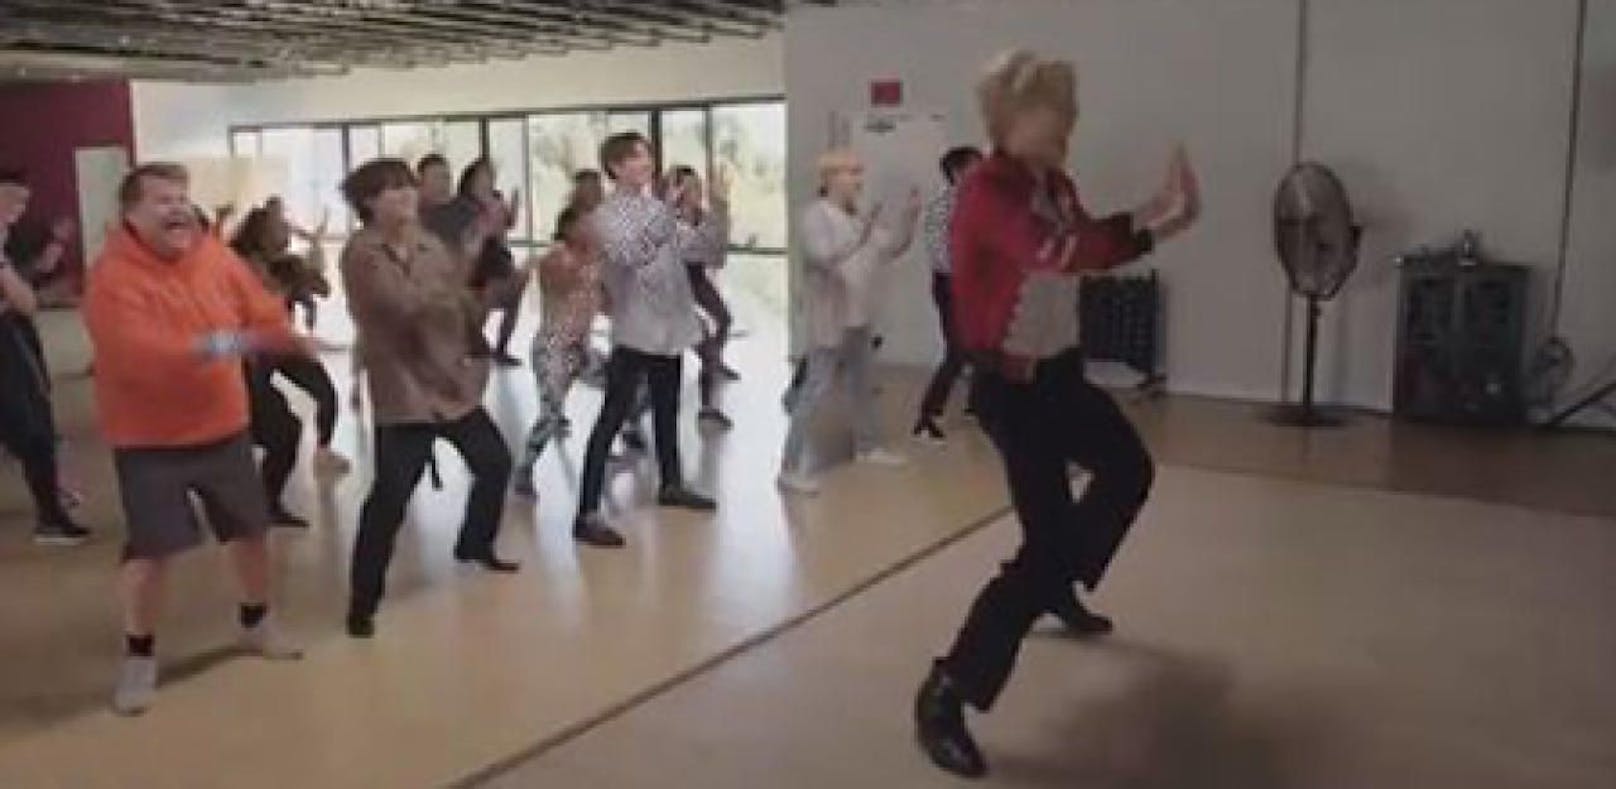 James Corden quält sich bei "BTS" K-Pop-Choreo